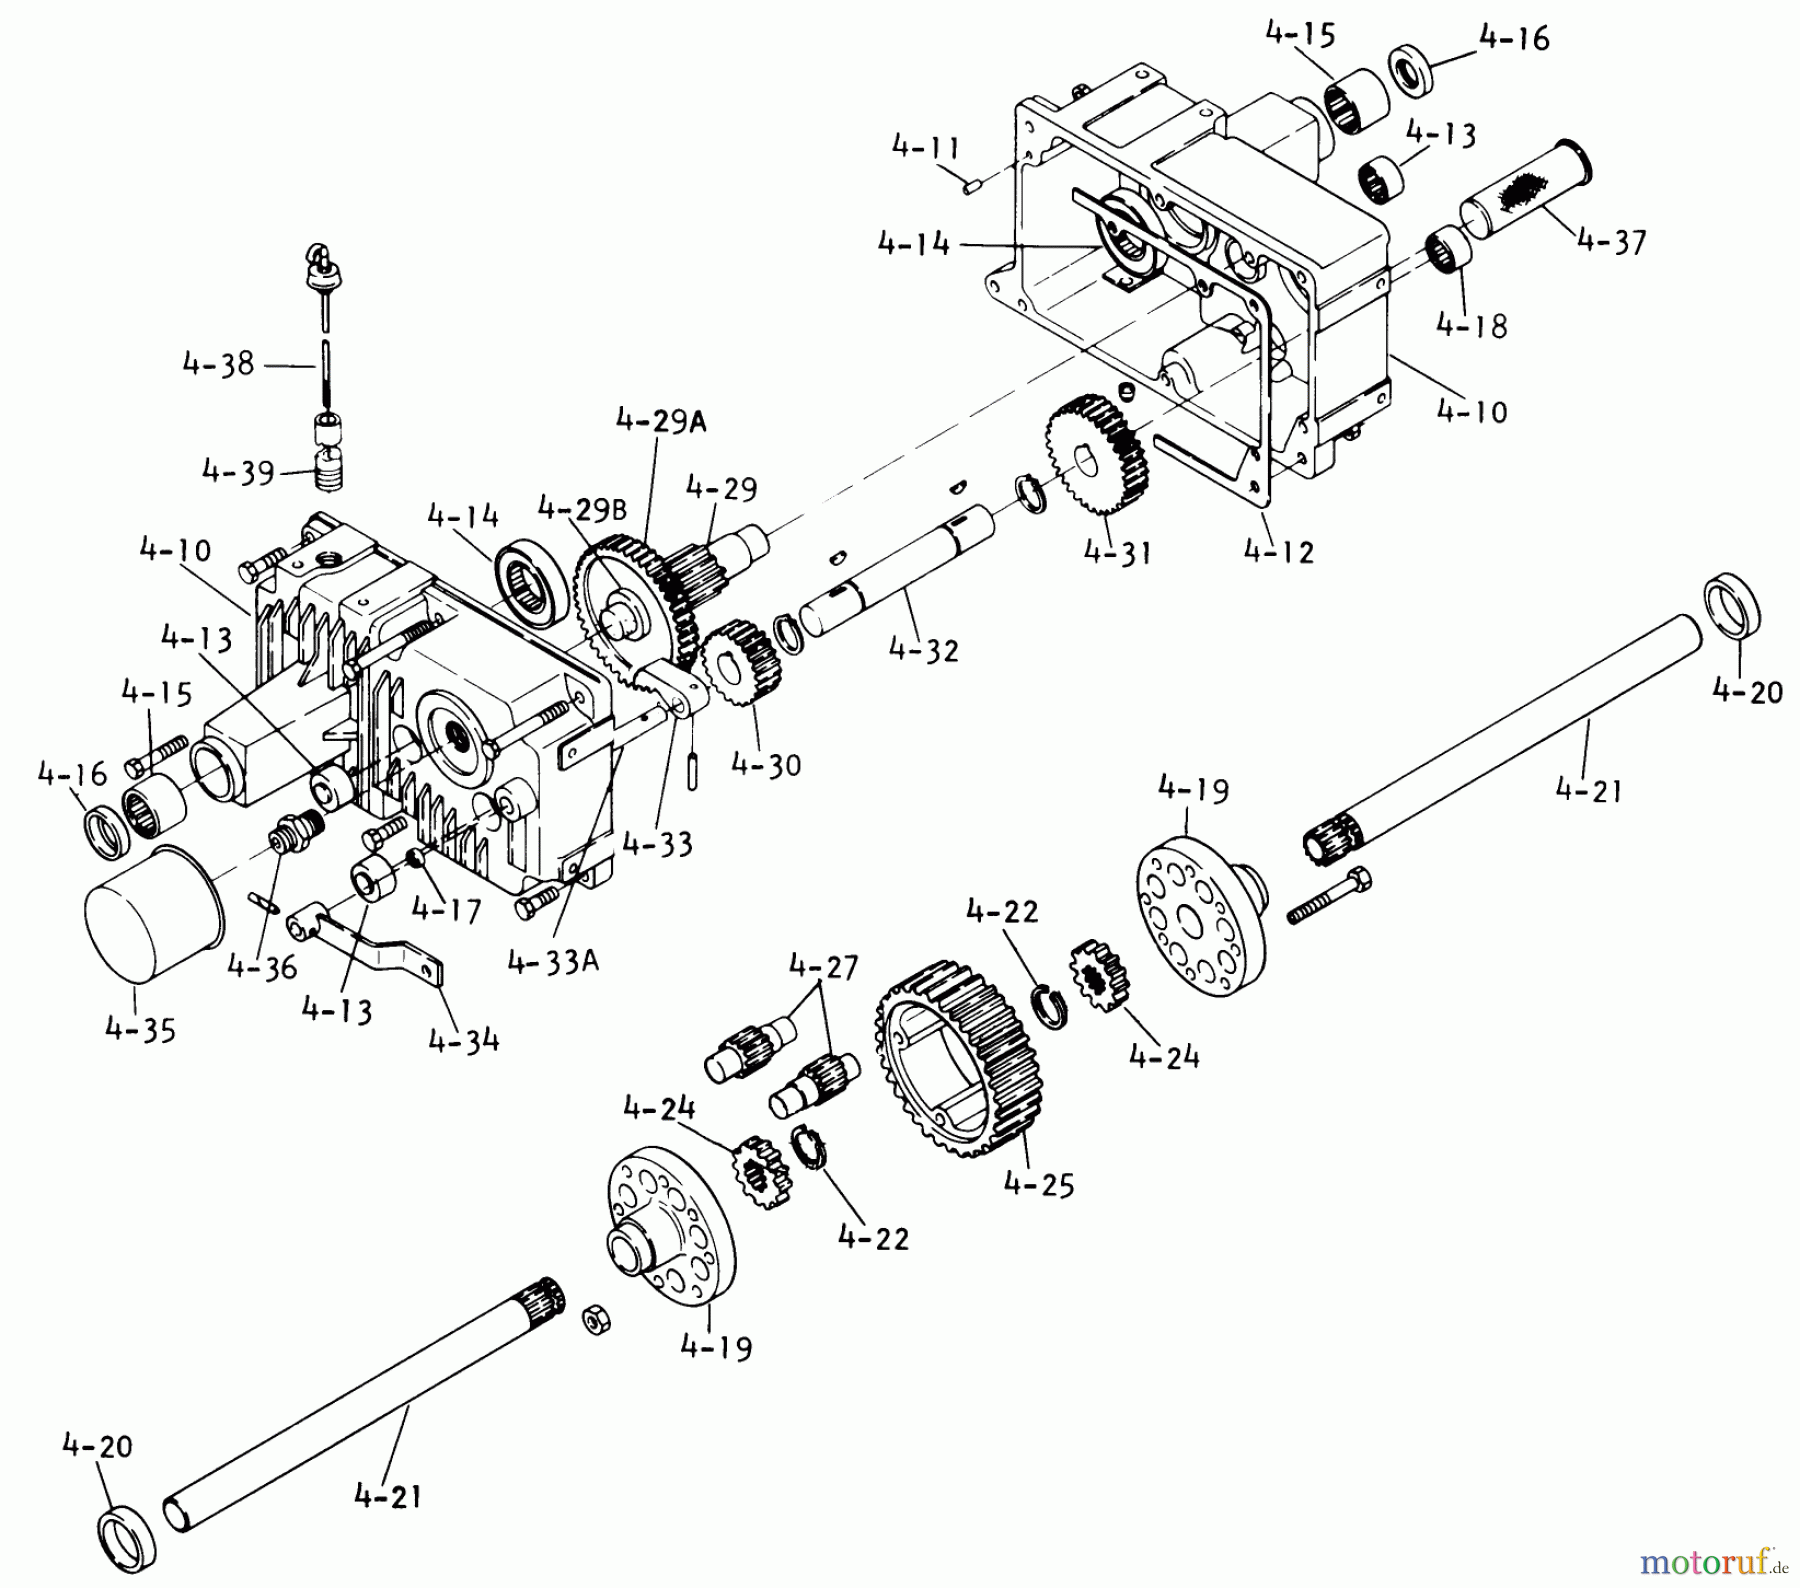  Toro Neu Mowers, Lawn & Garden Tractor Seite 1 1-0611 (D-180) - Toro D-180 Automatic Tractor, 1974 TRANSAXLE - COMPONENT PARTS (PLATE 4.010)